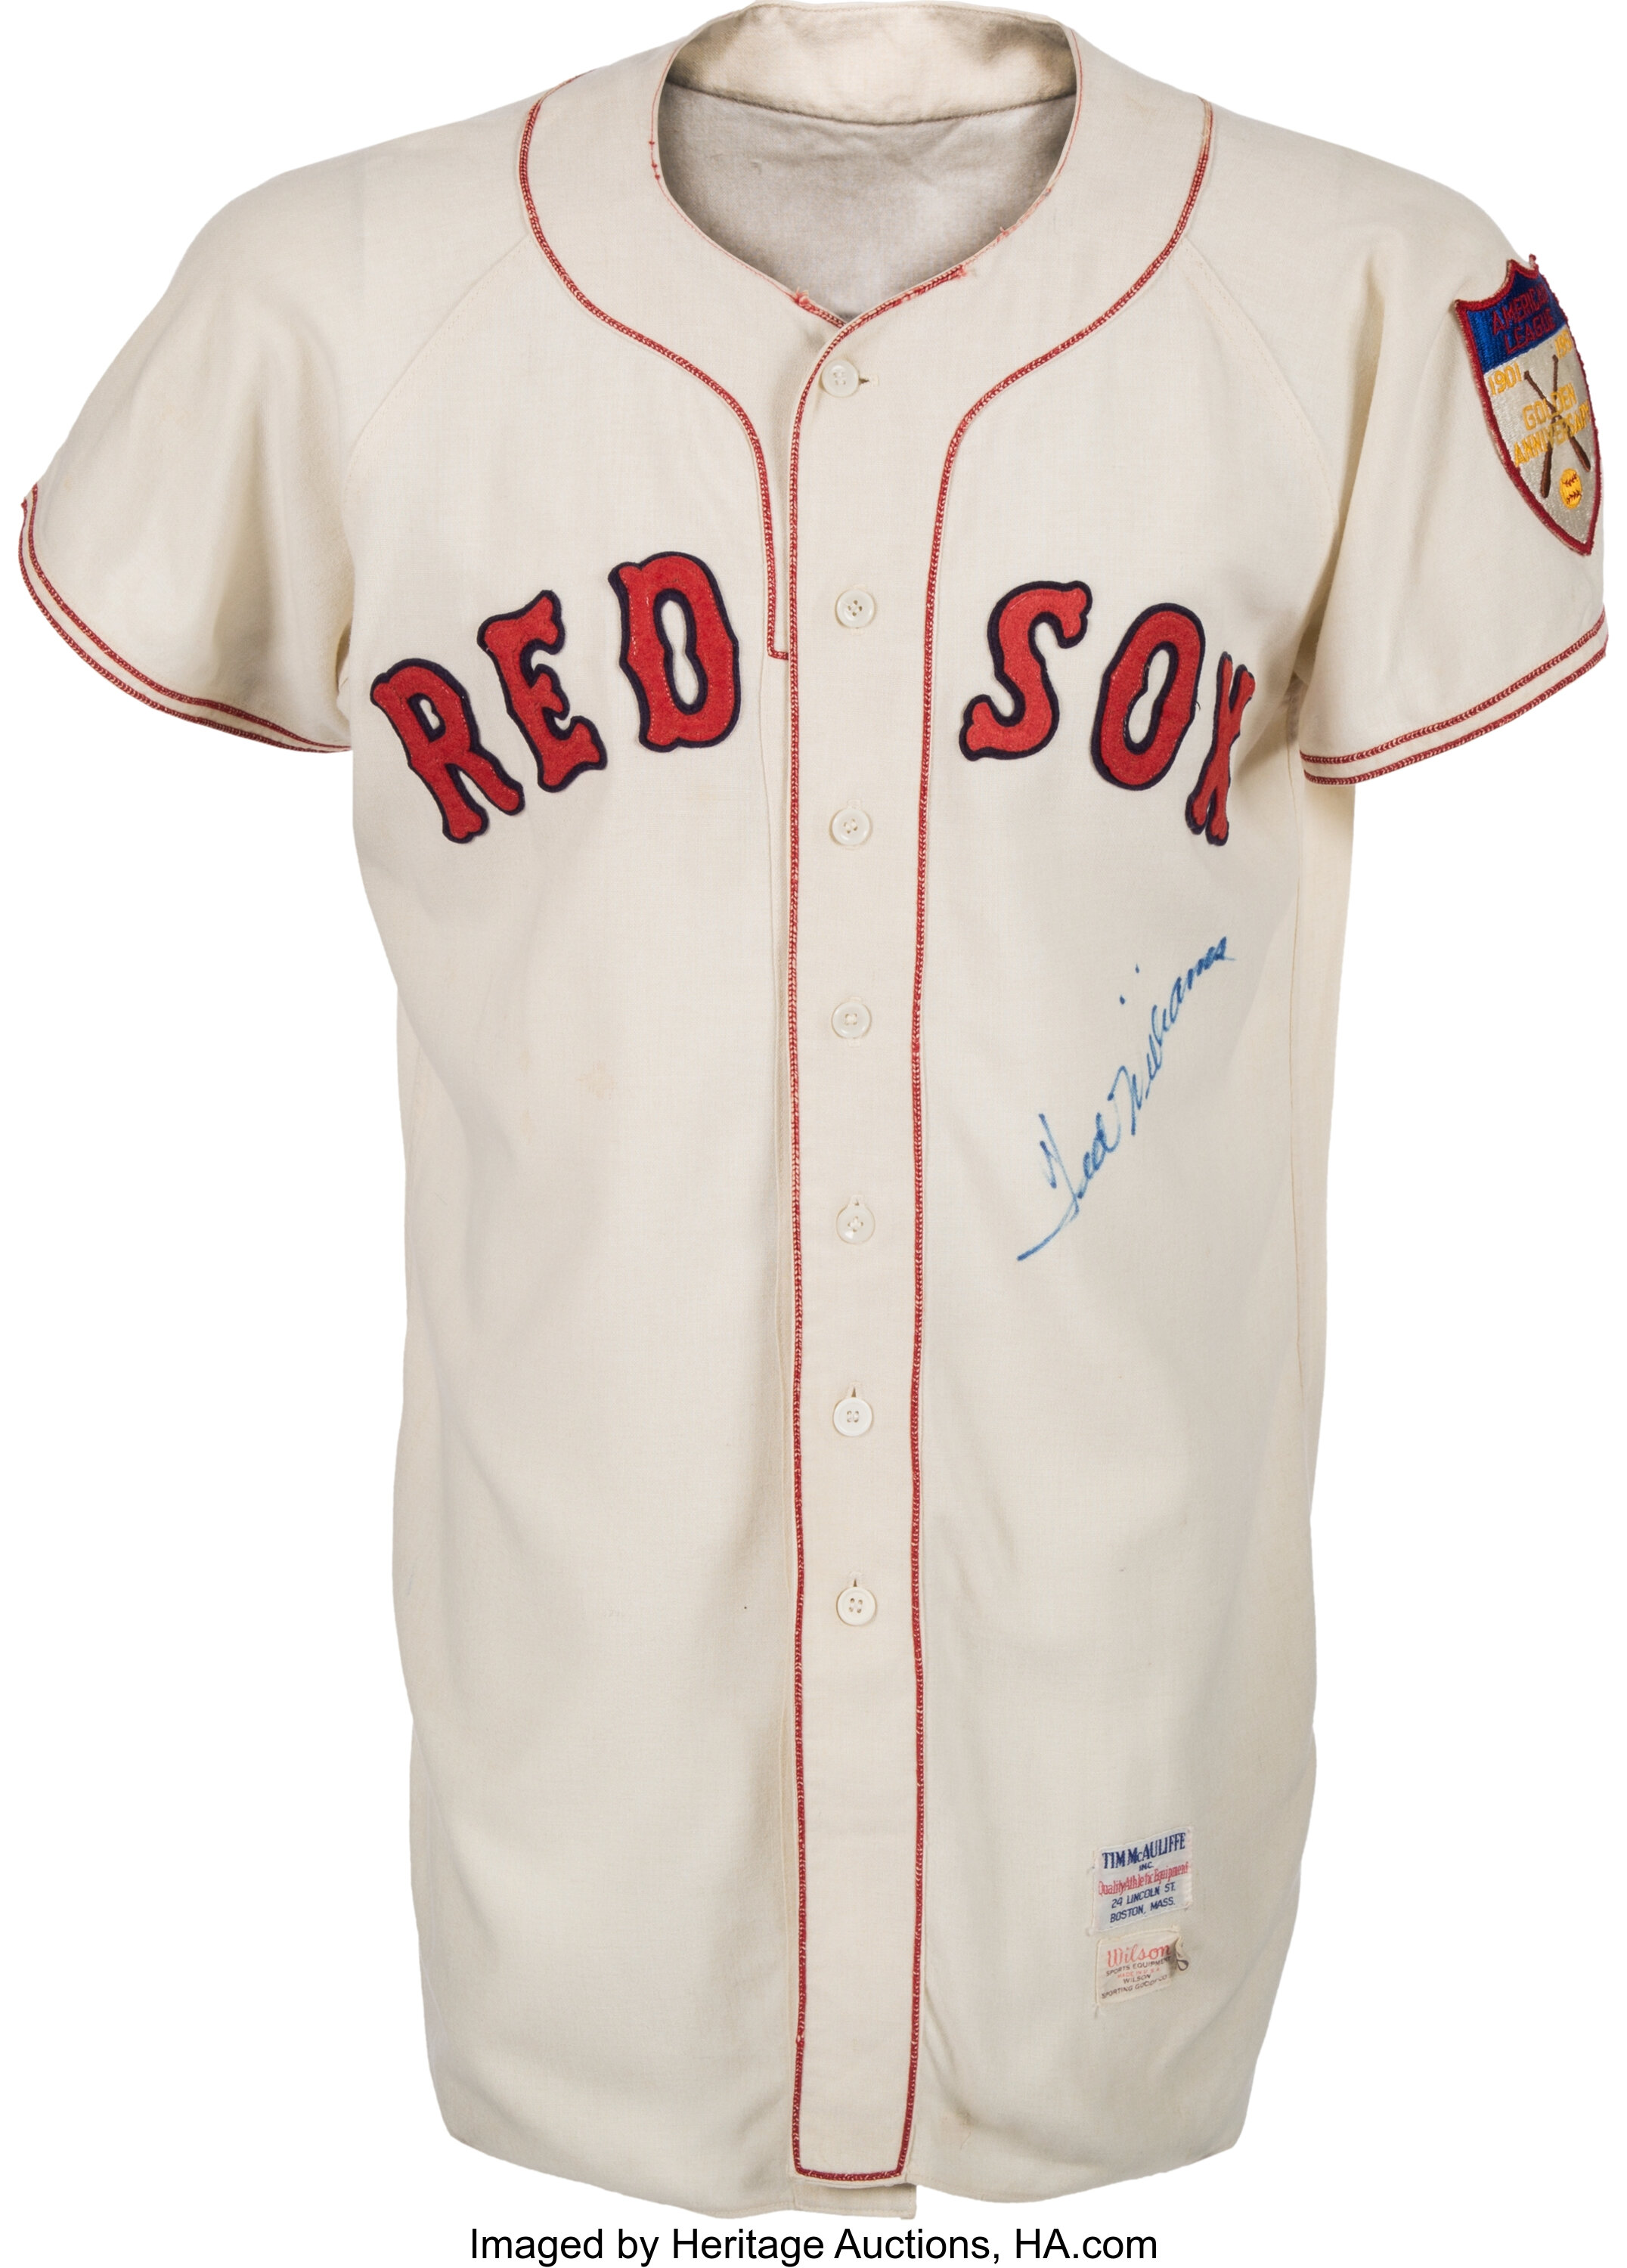 Boston Red Sox Jerseys, Red Sox Baseball Jerseys, Uniforms